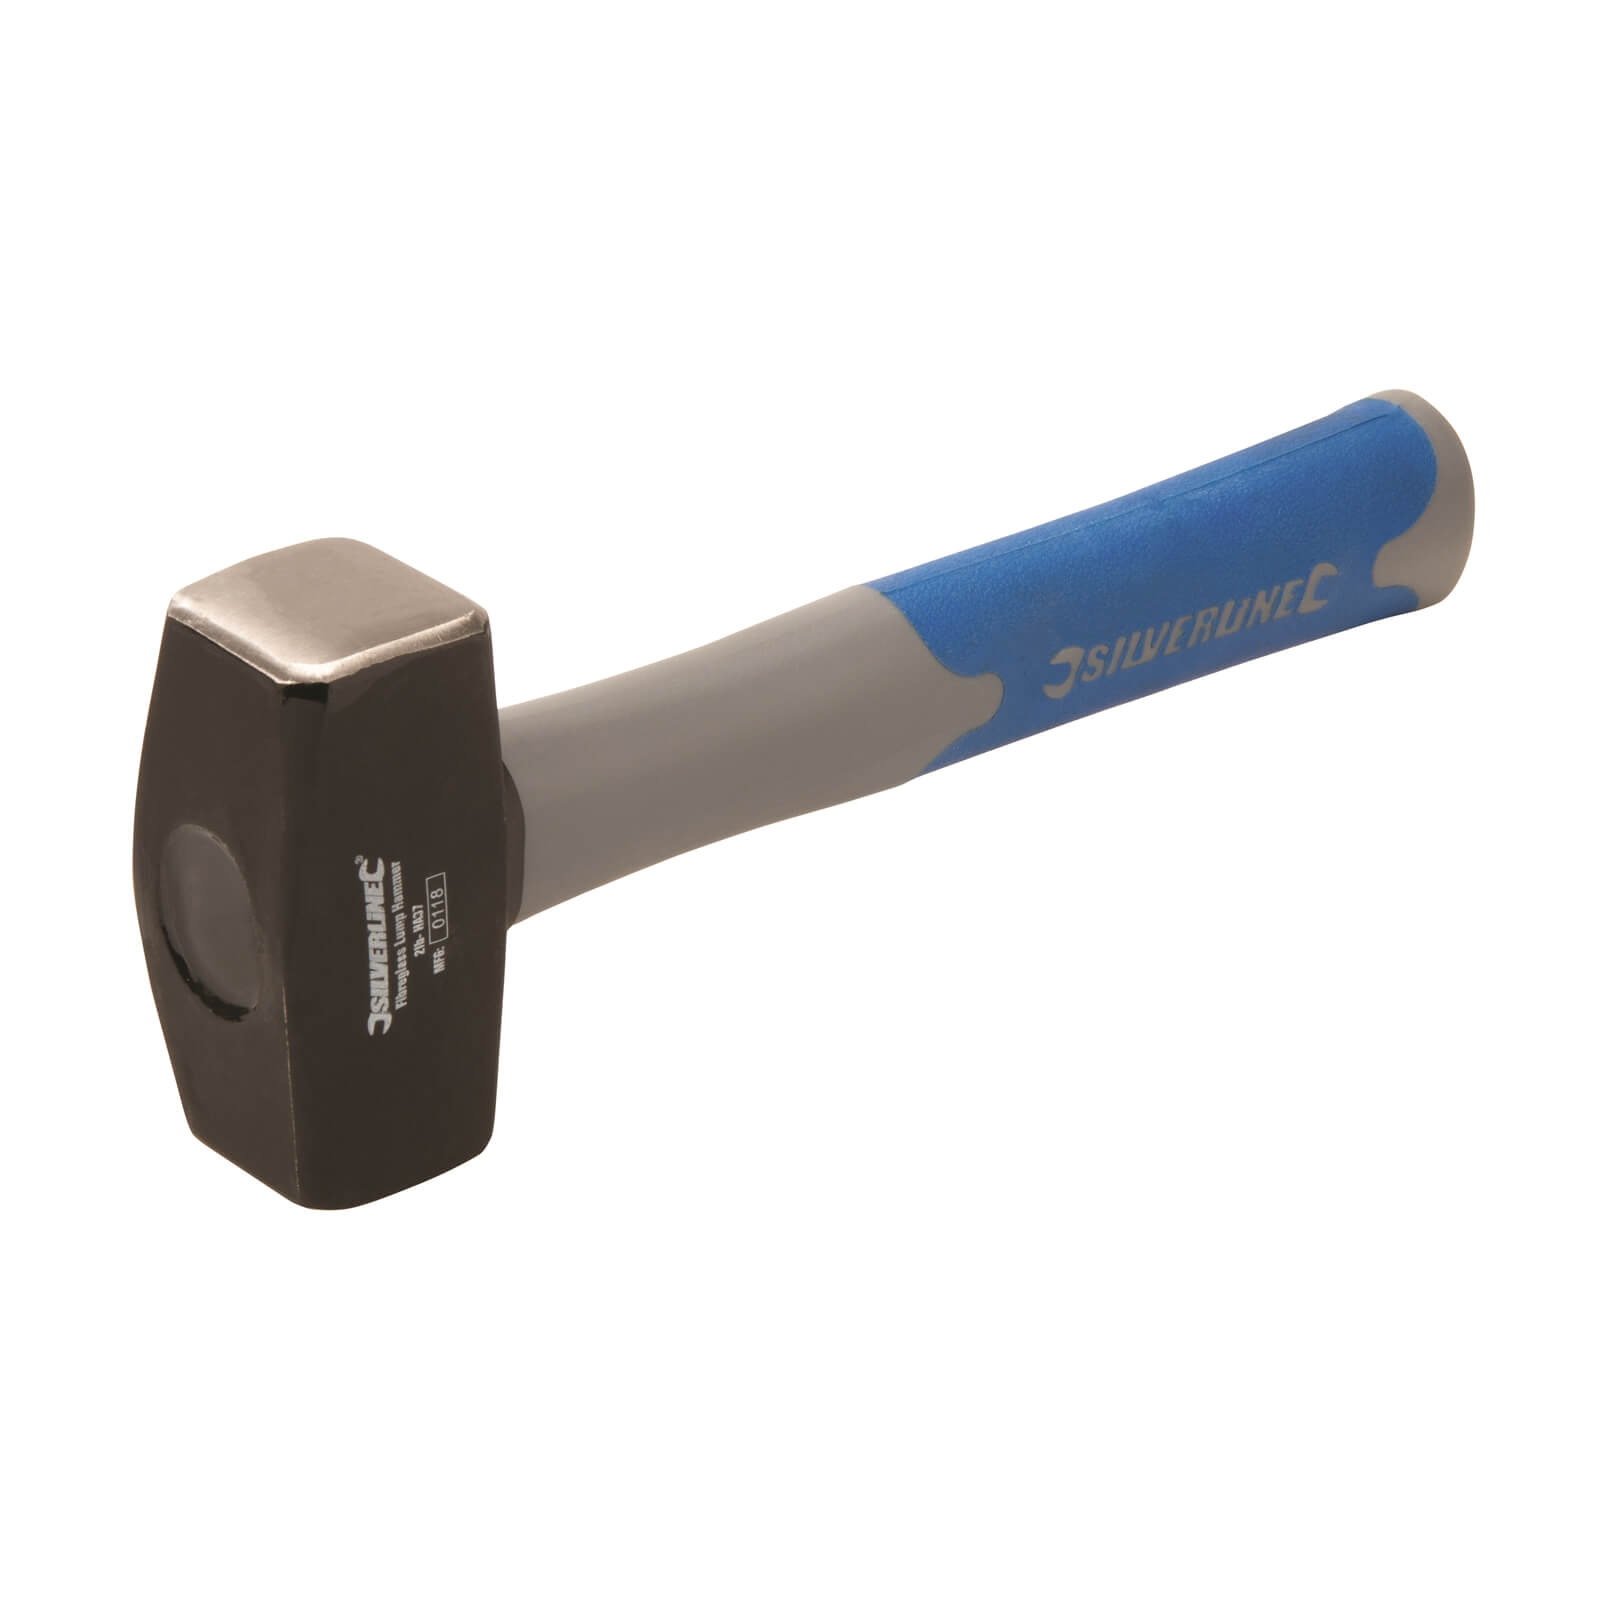 Silverline Fibreglass Lump Hammer - 2lb (0.91kg)